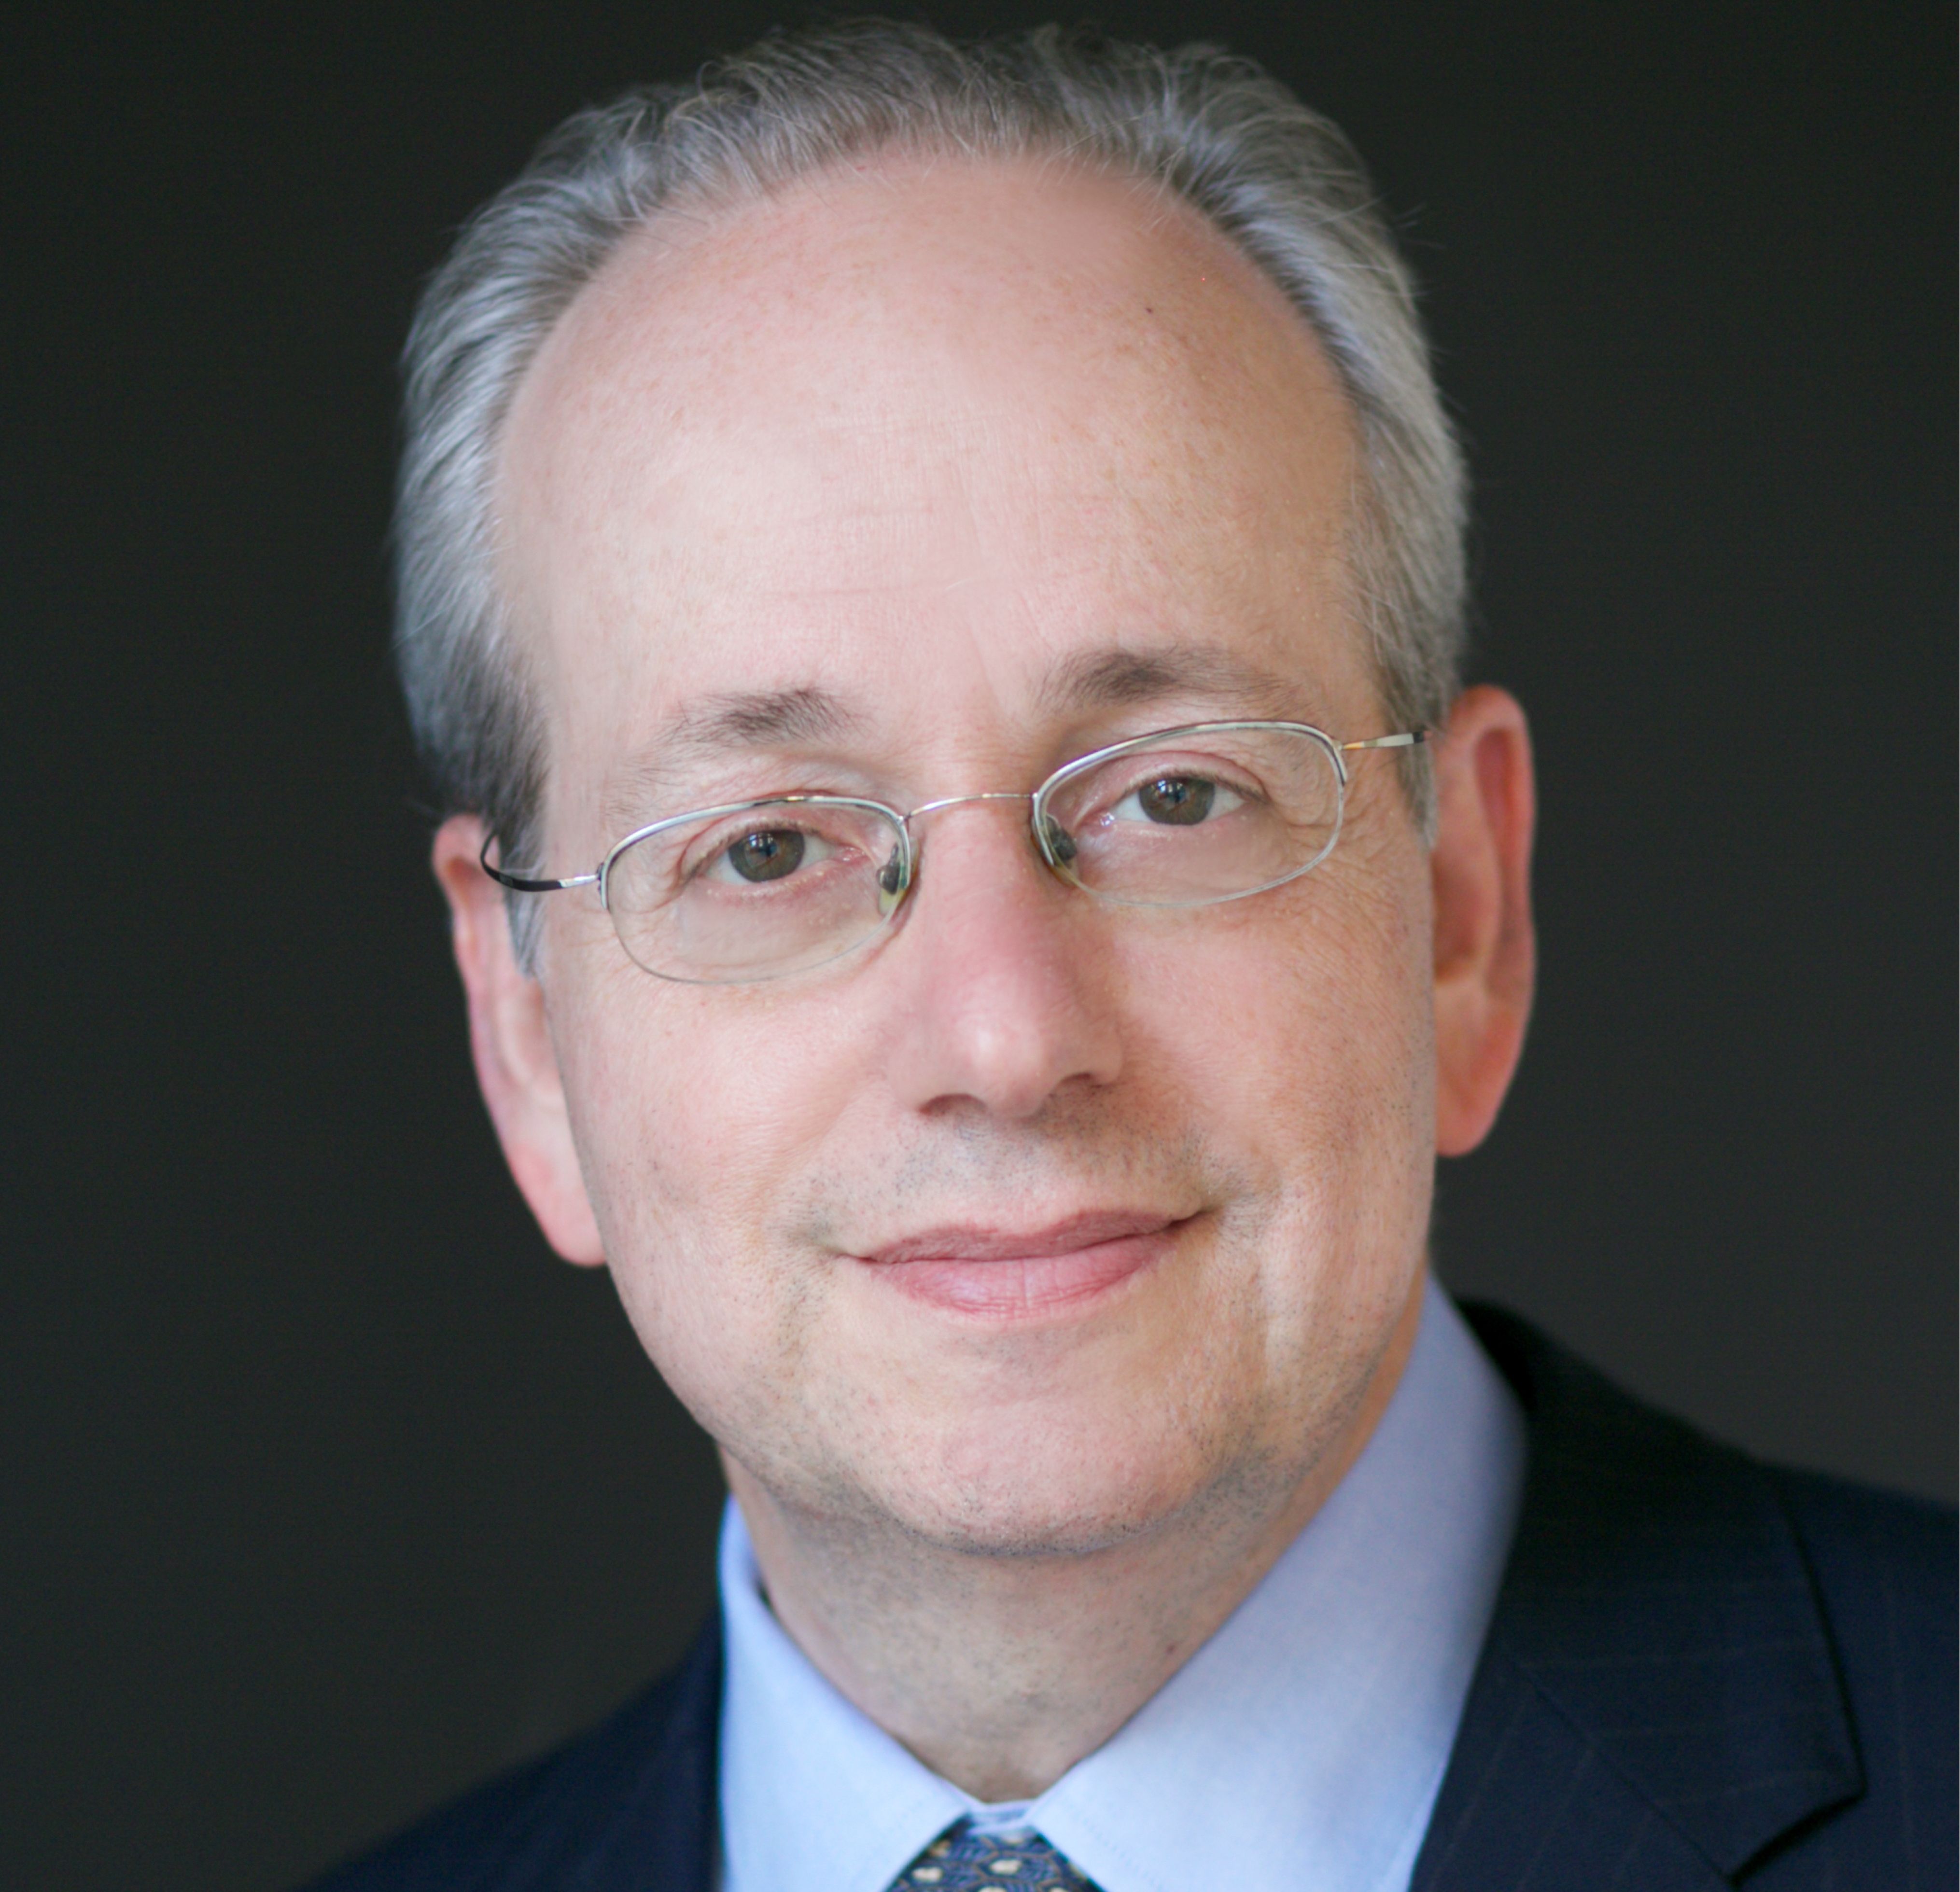 Gordon Crovitz, co-founder of NewsGuard